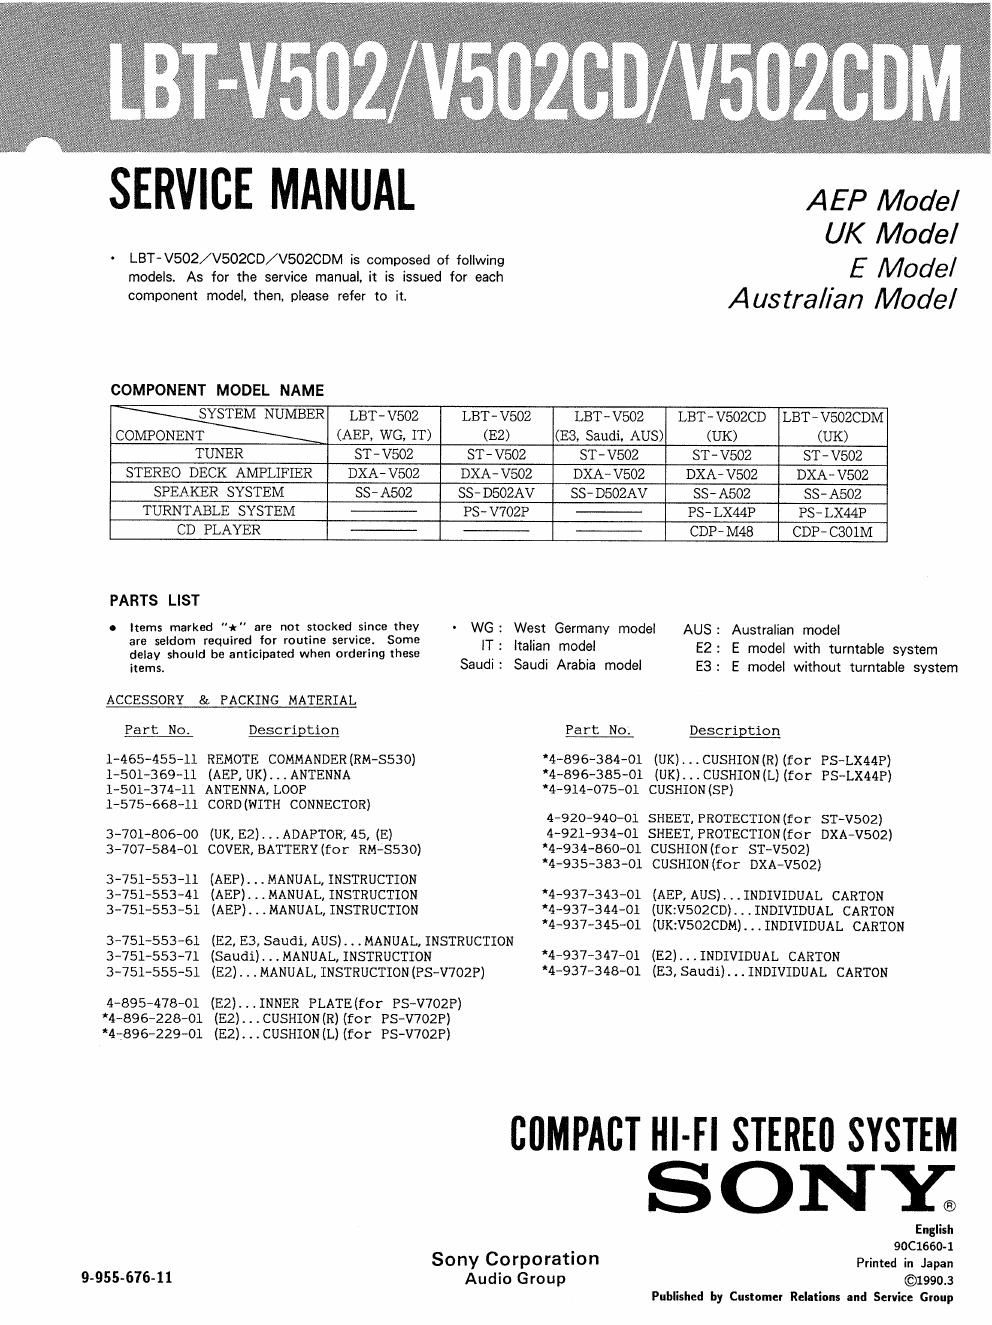 sony lbt v 502 cdm service manual